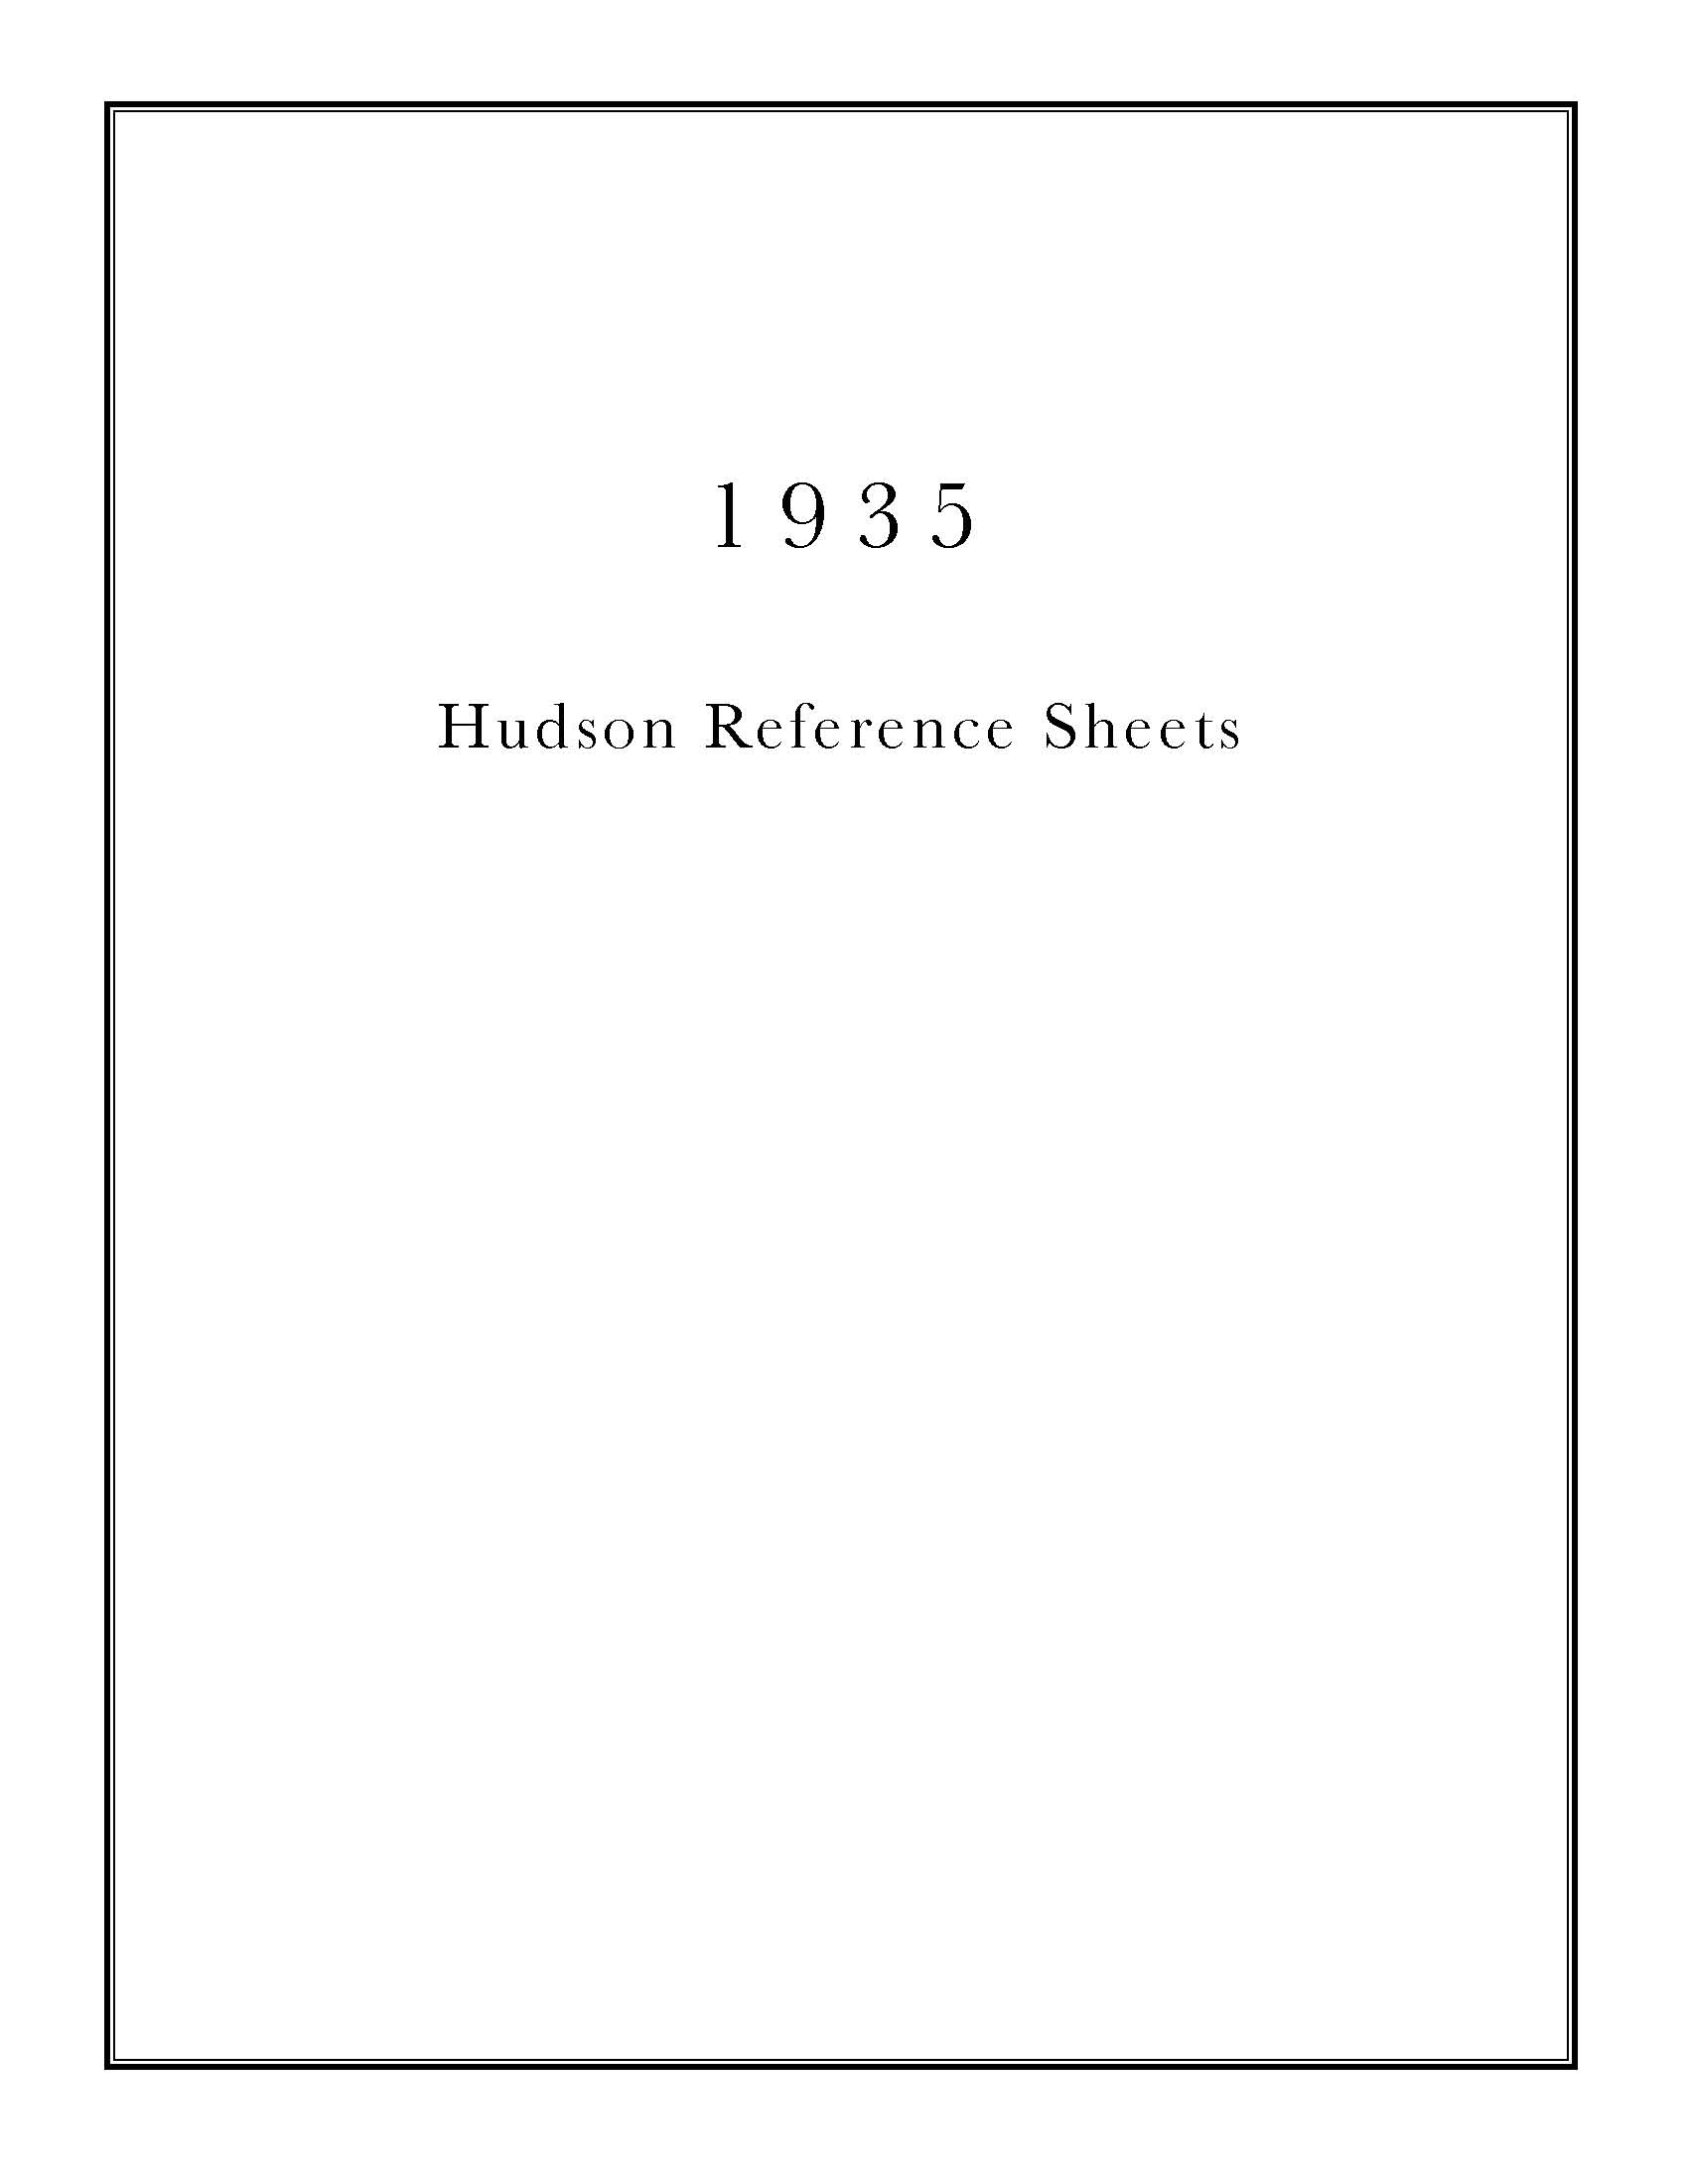 1935 Hudson Reference Sheets